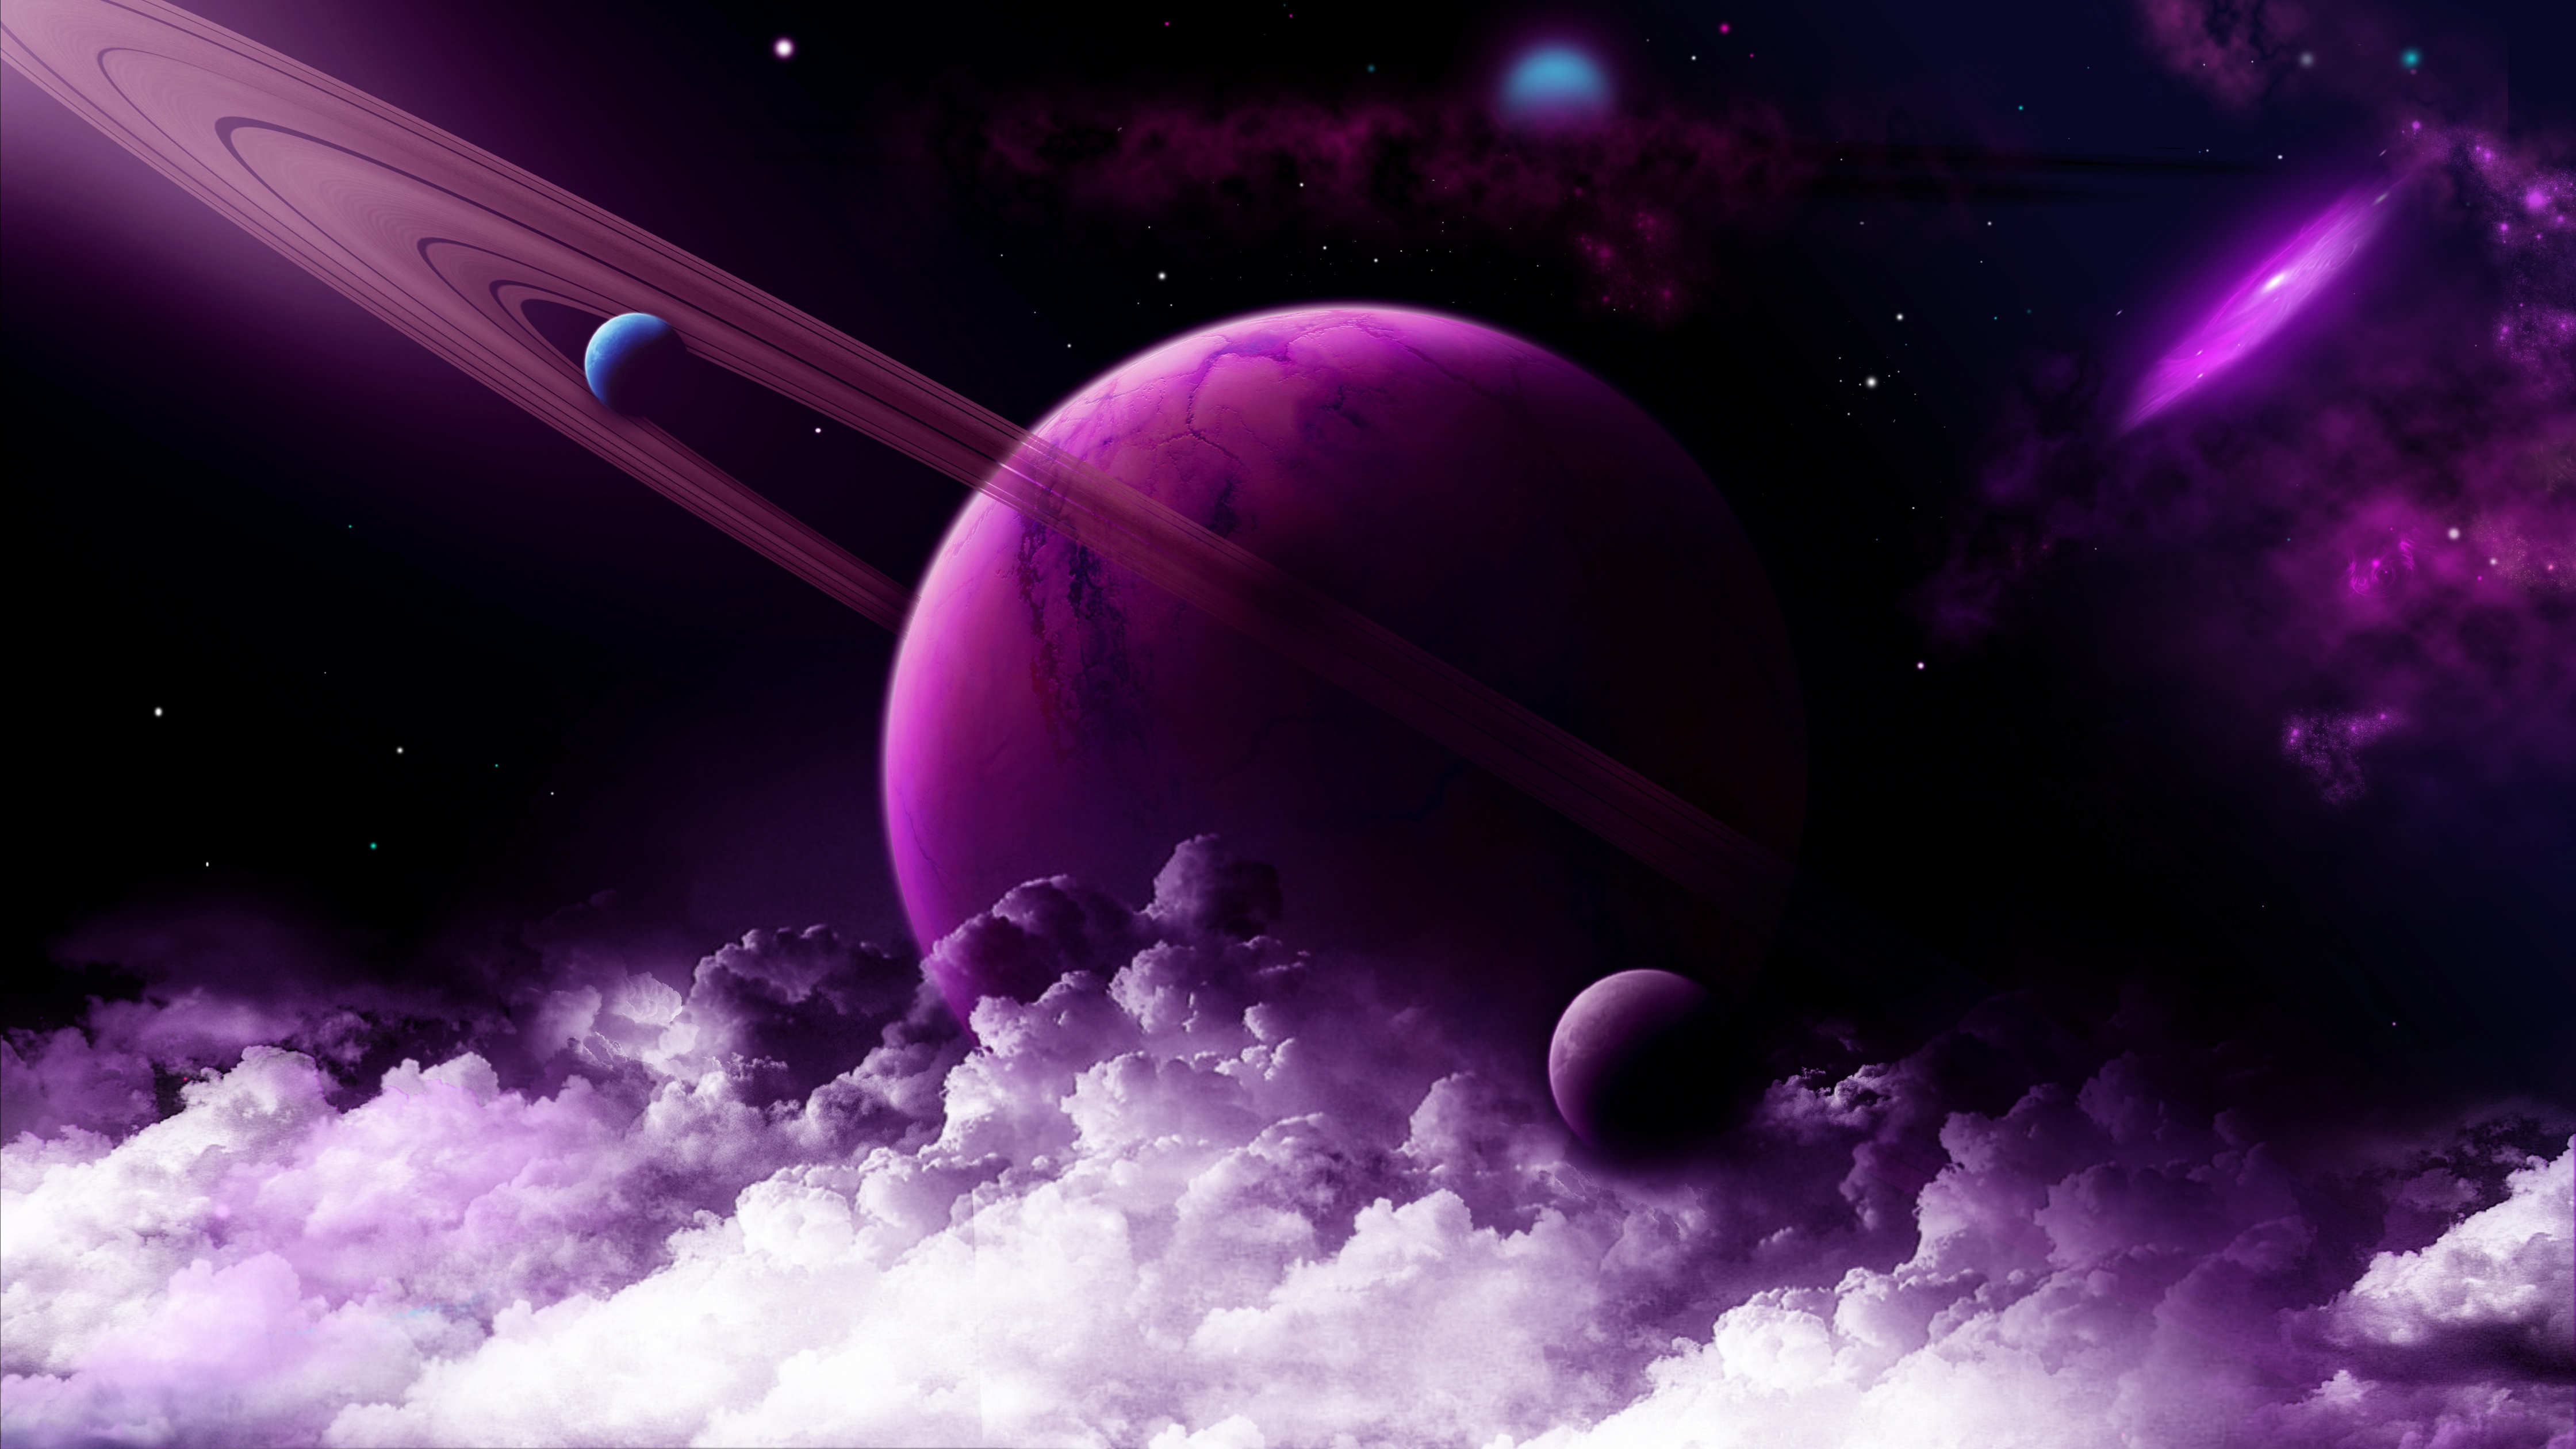 space stars background purple